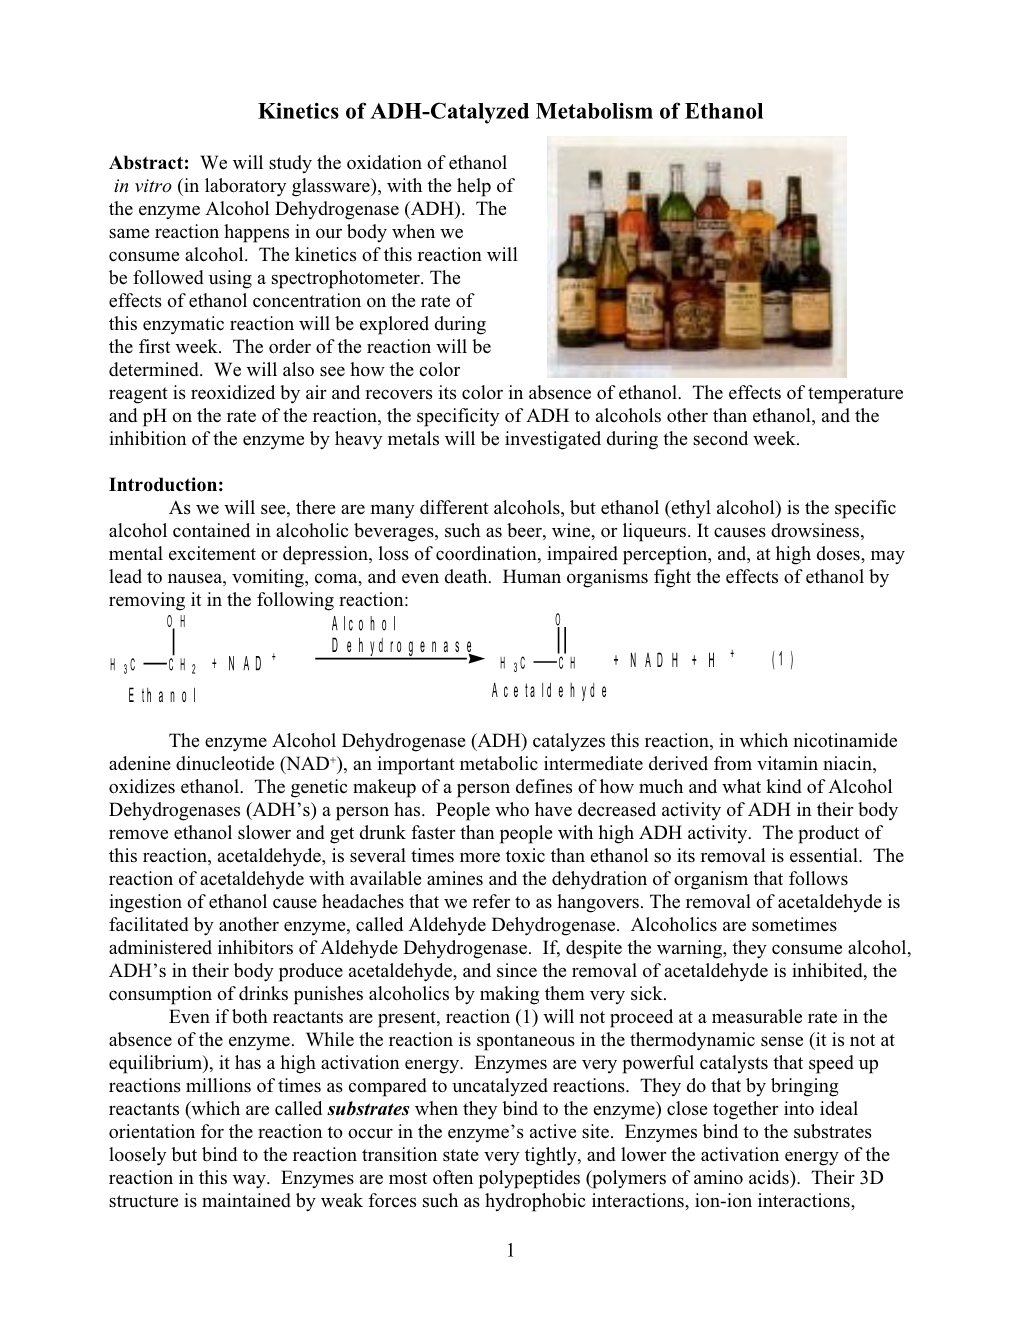 Kinetics of Alcohol Dehydrogenase